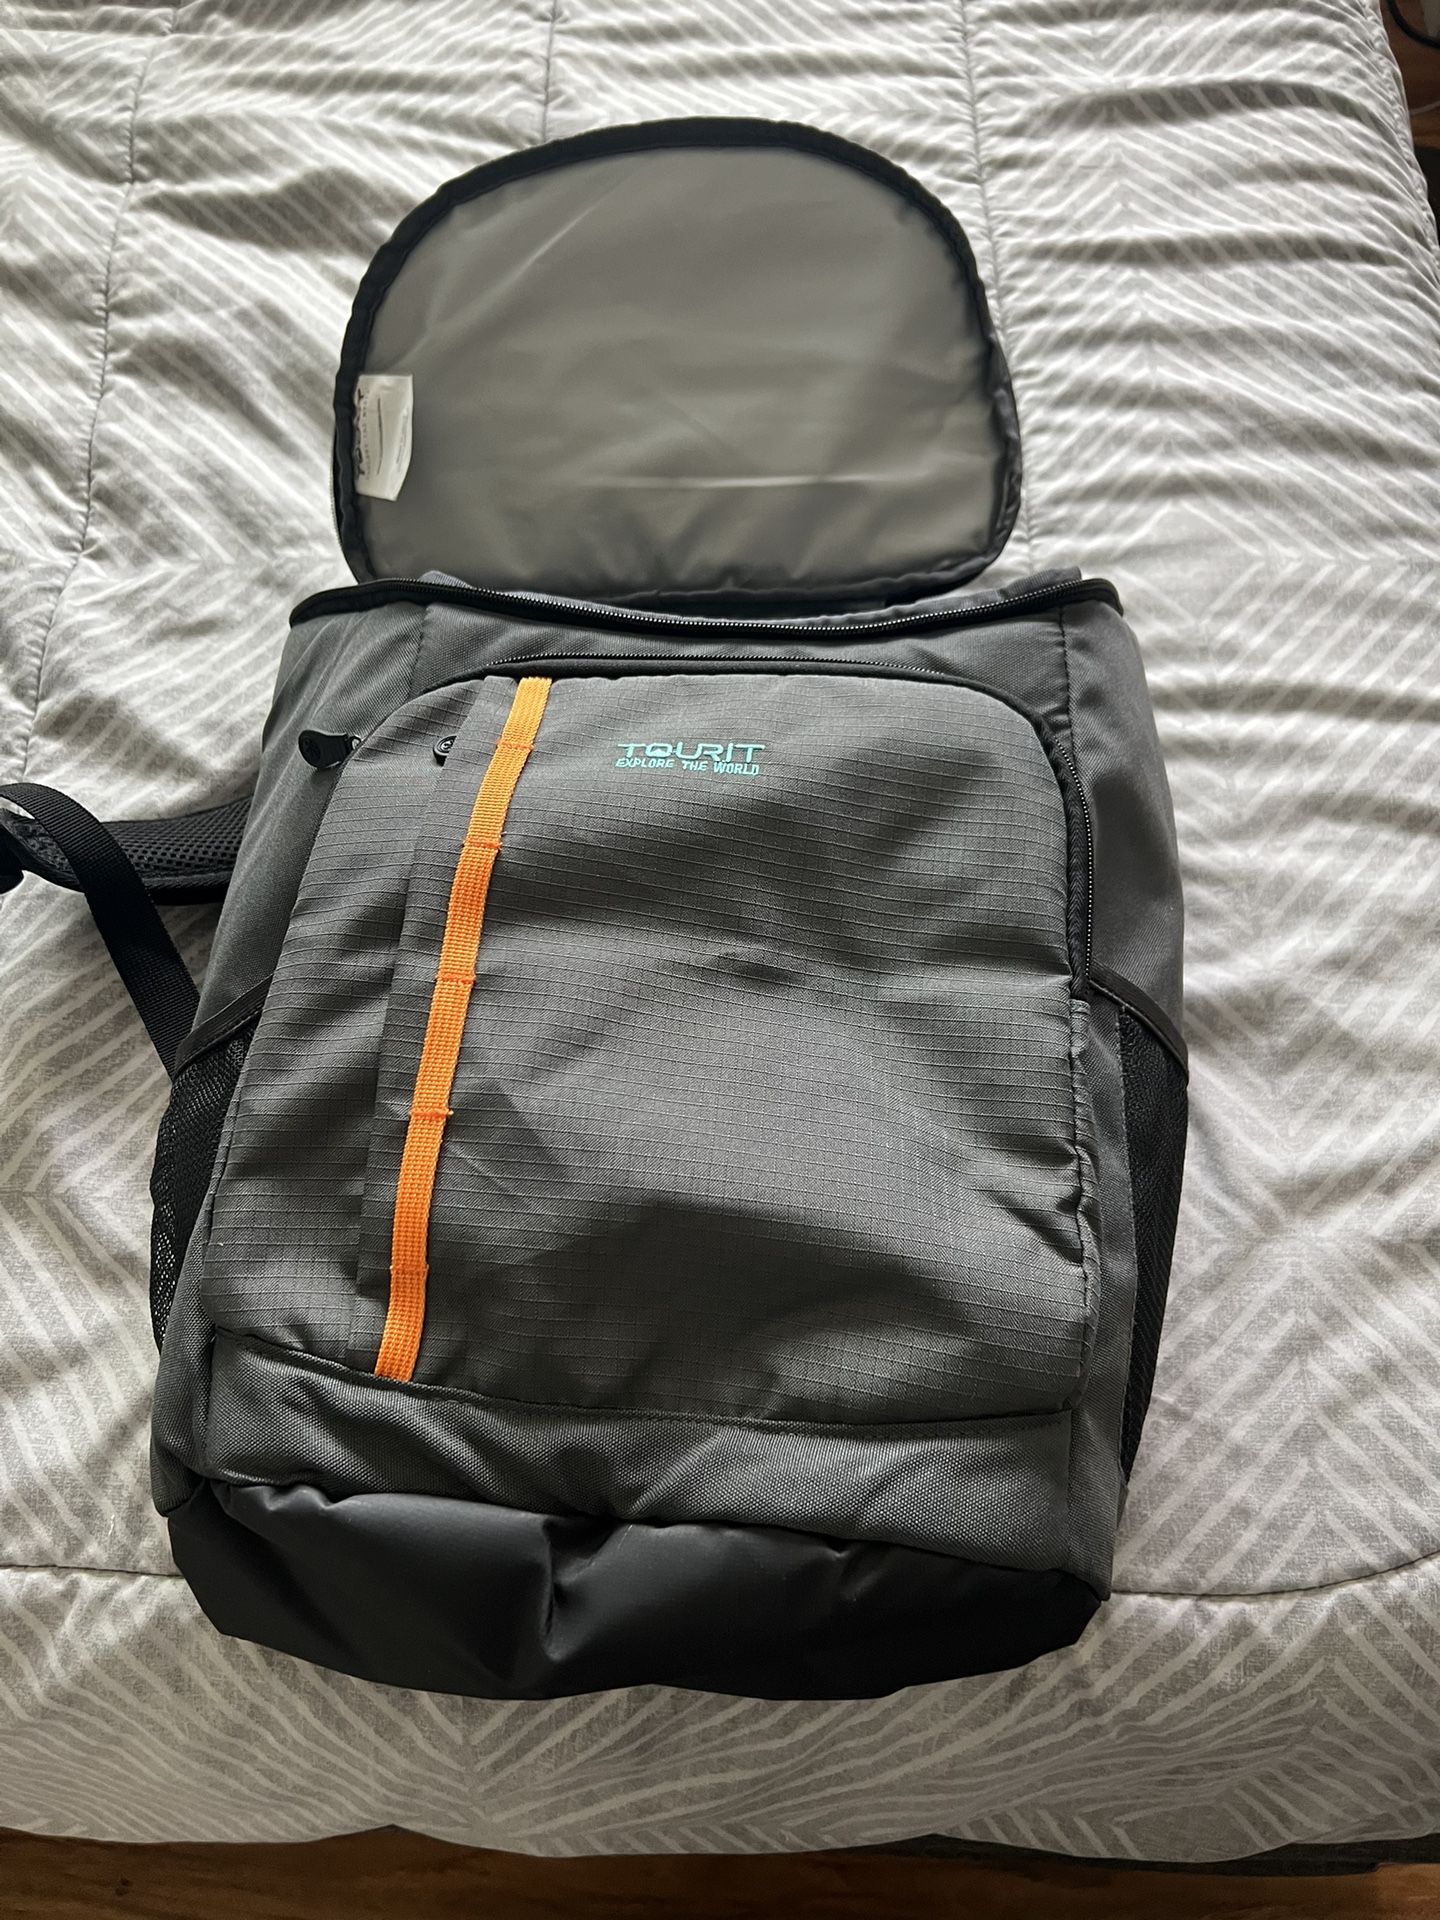 Tourit Backpack Cooler